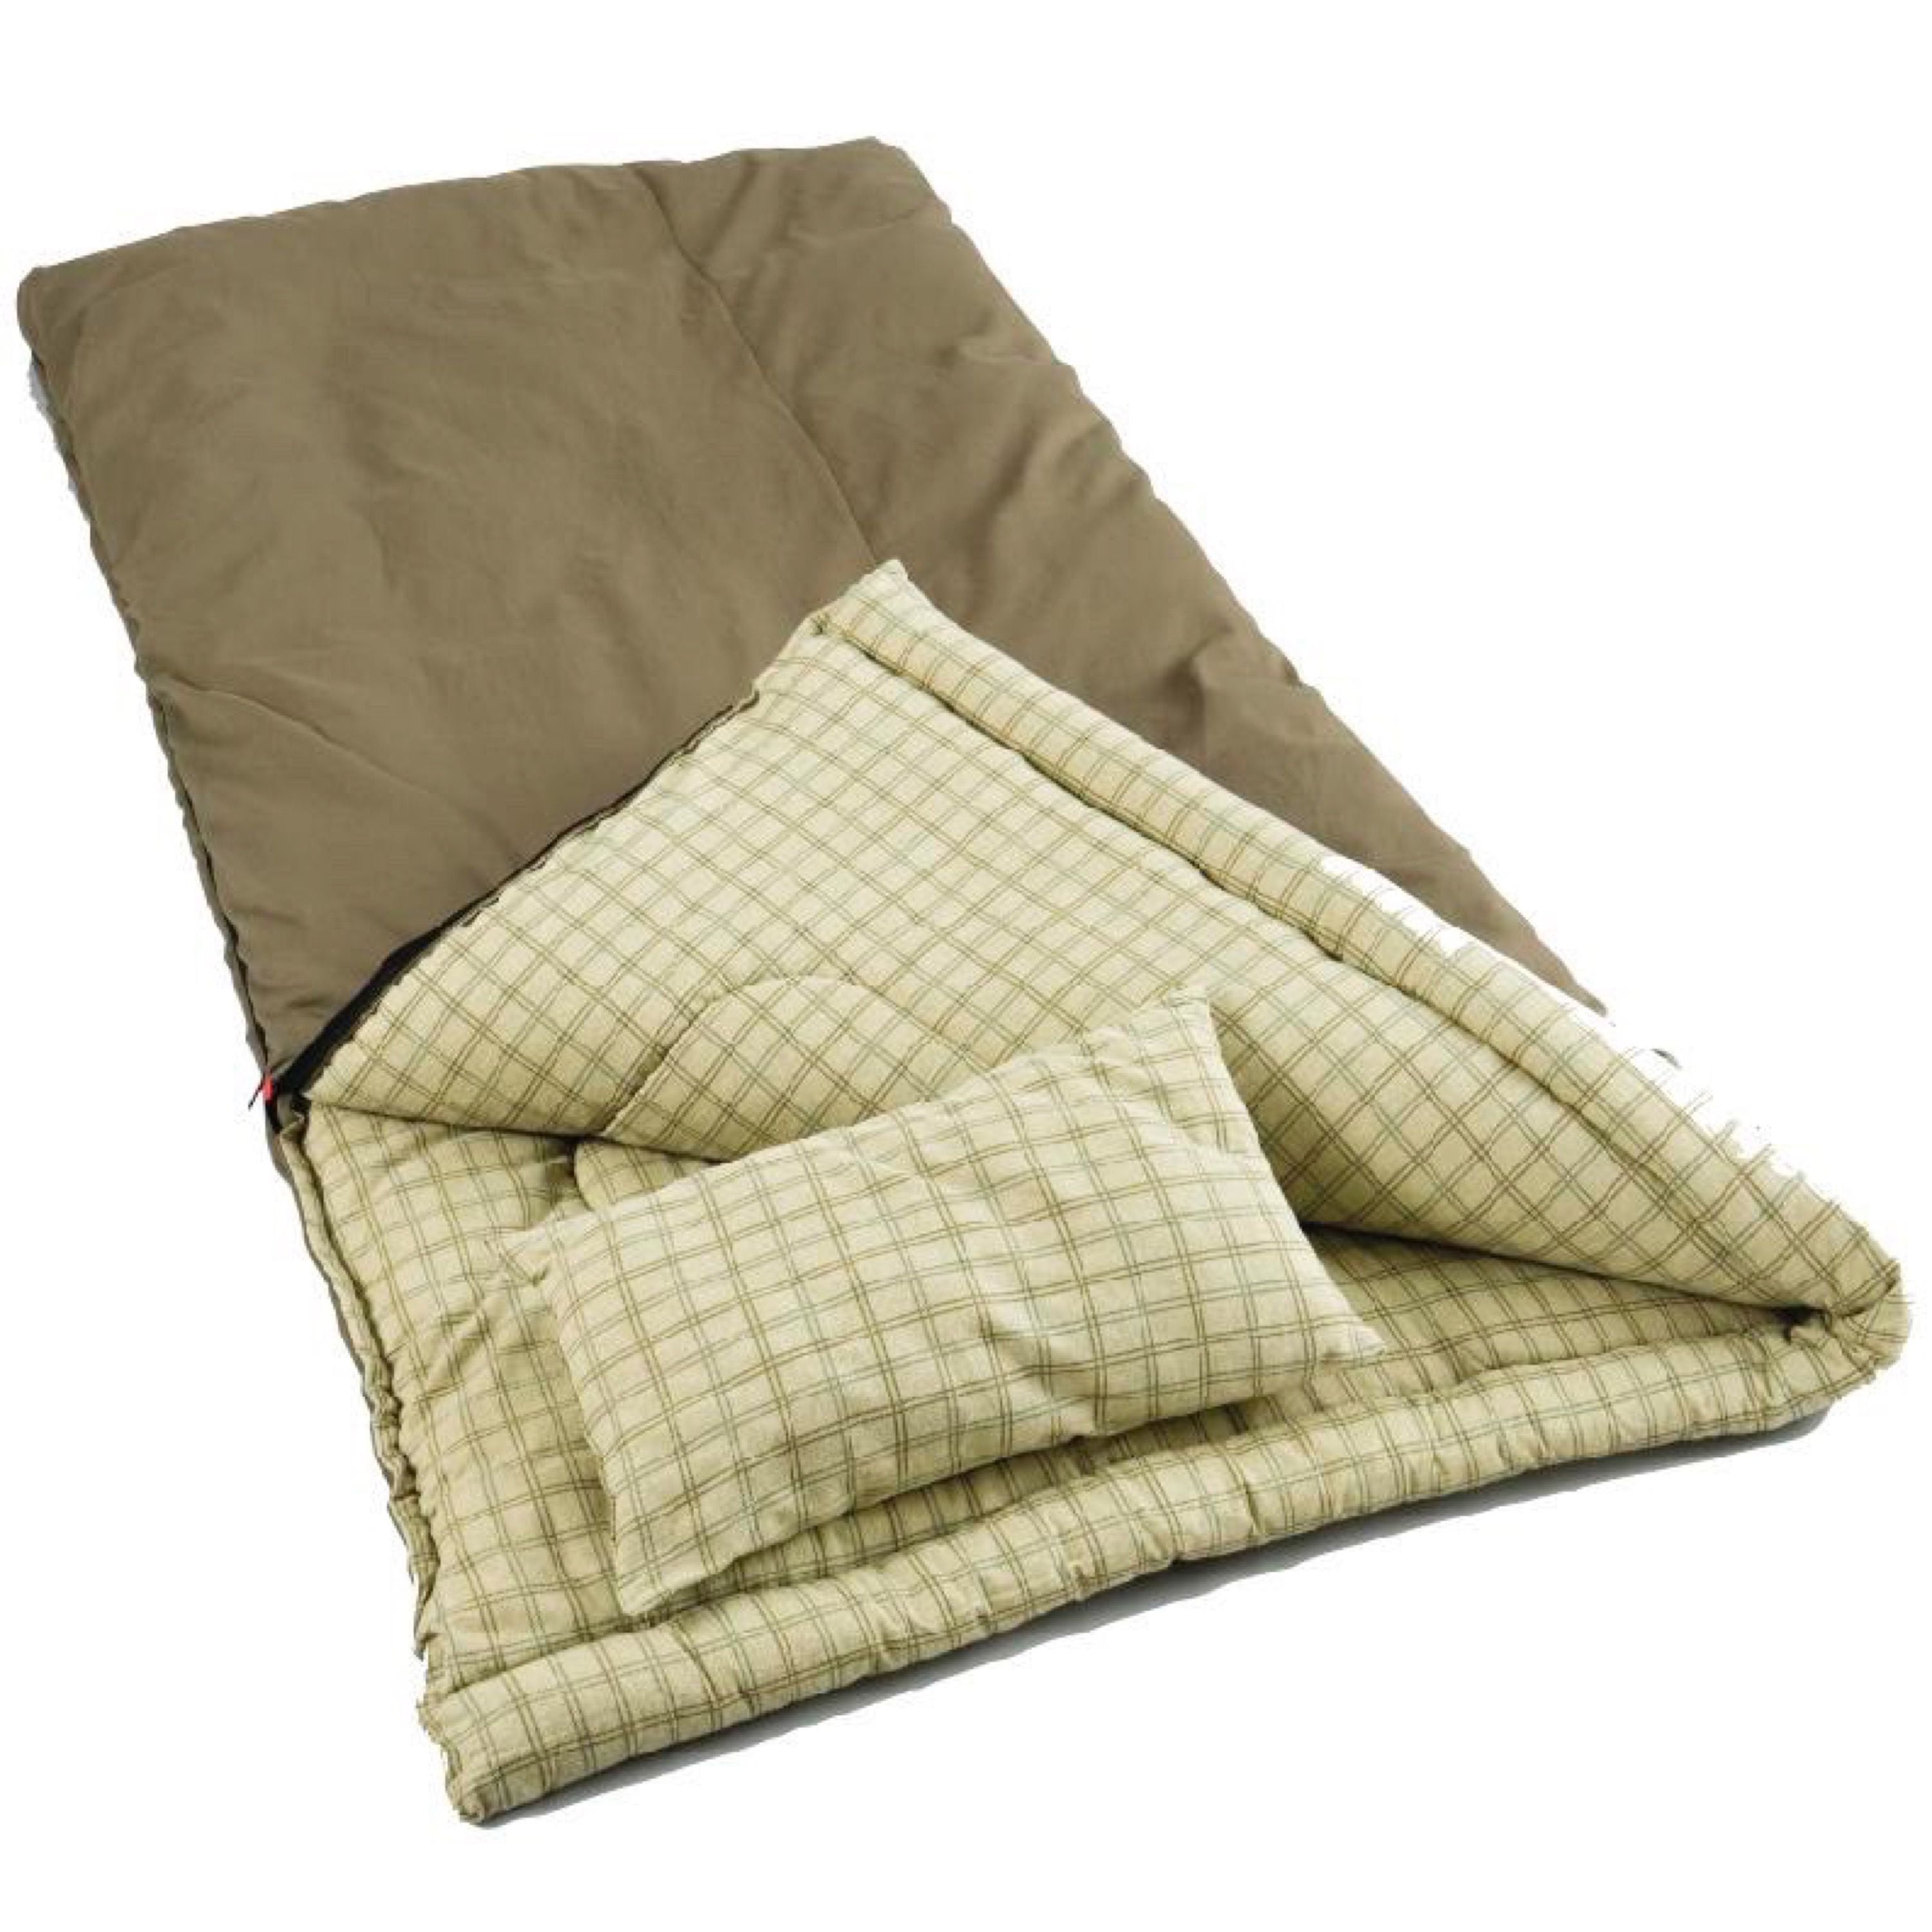 Camping Warm Canvas 6 lb Sleeping Bag 39" x 81" NEW Stansport Kodiak Hunting 